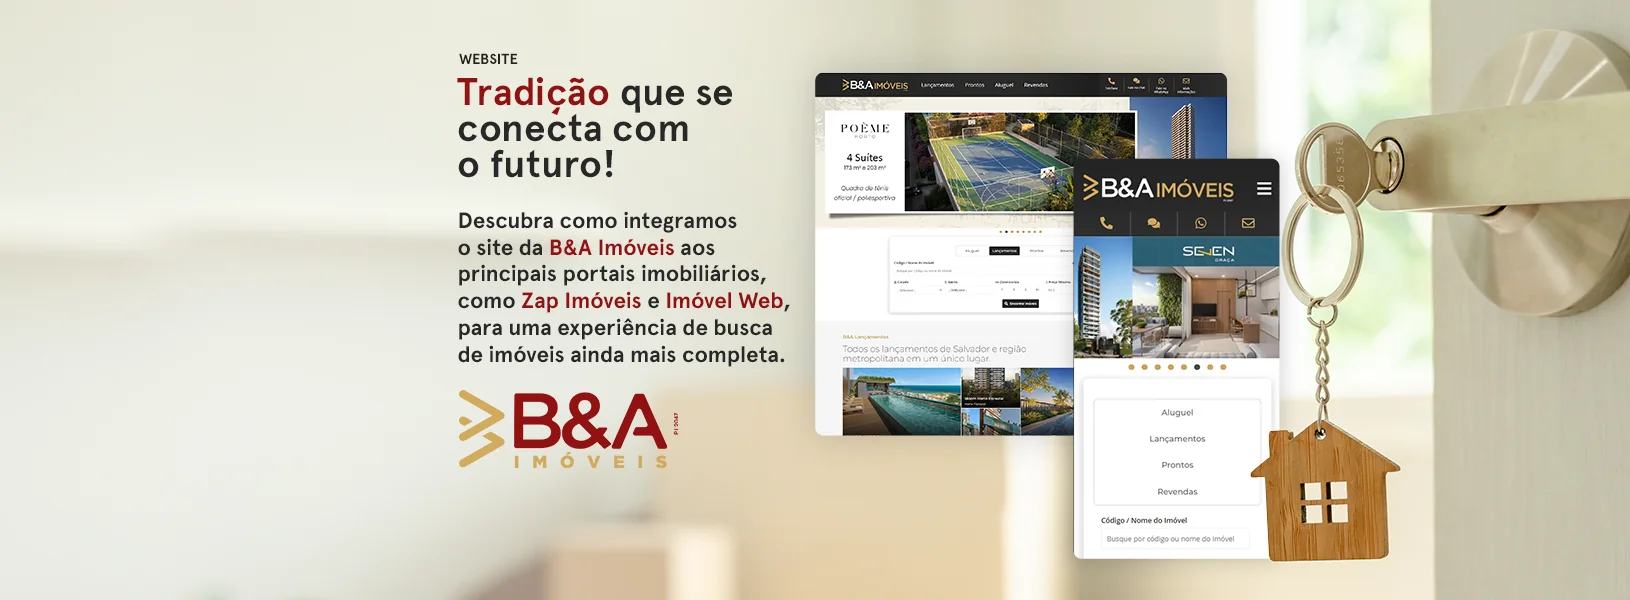 B&A Imóveis - Website